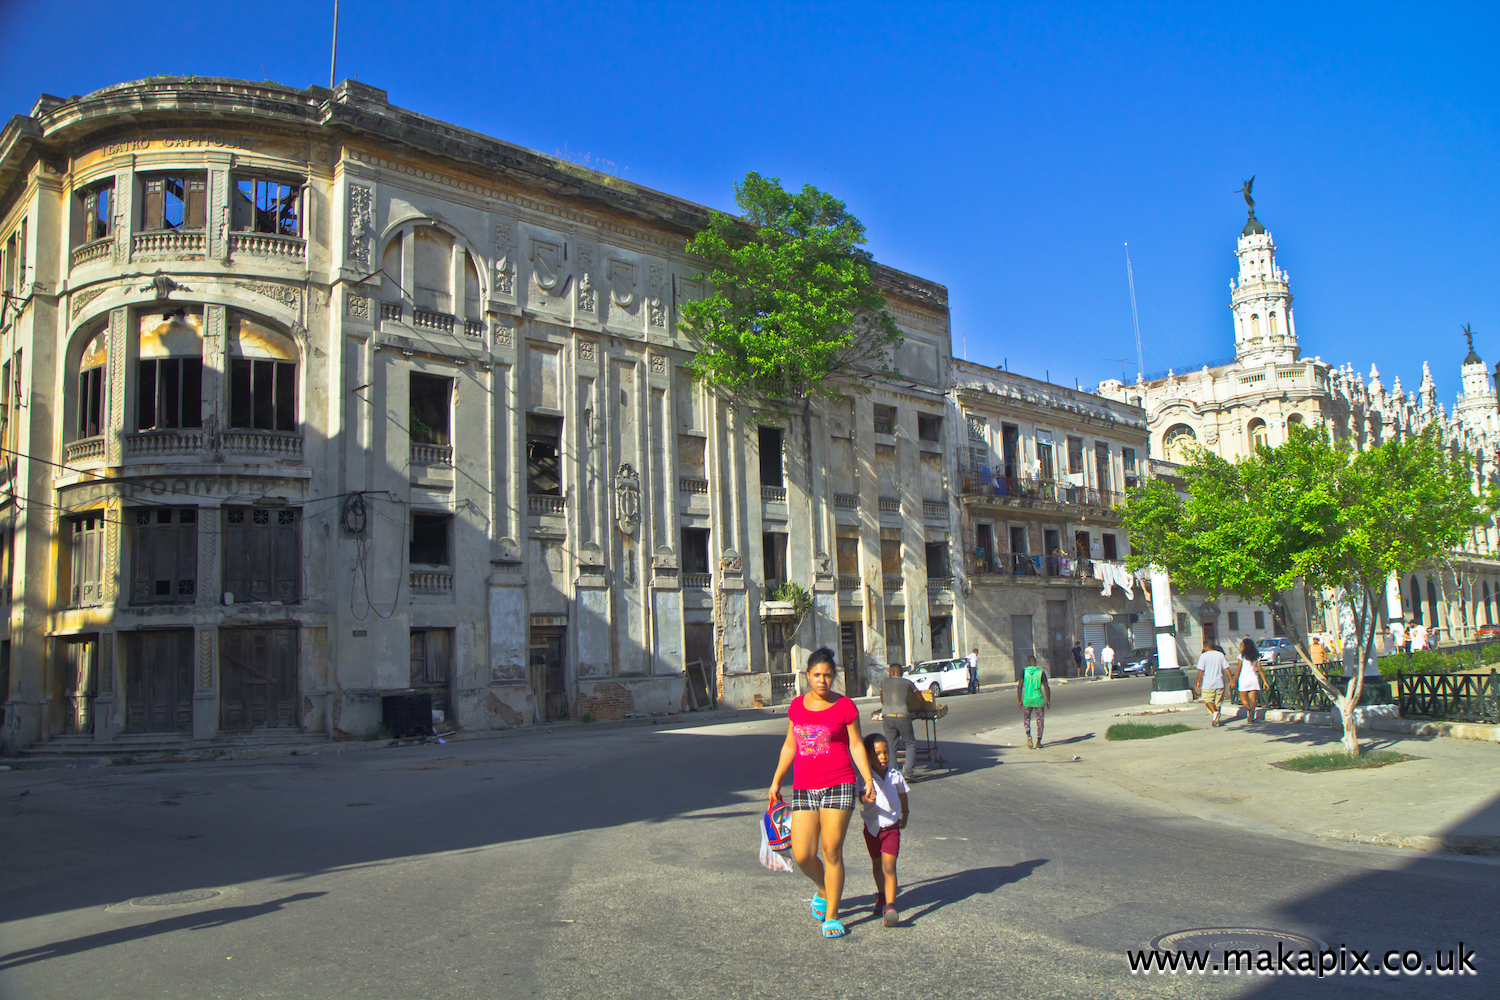 Old Havana, Cuba